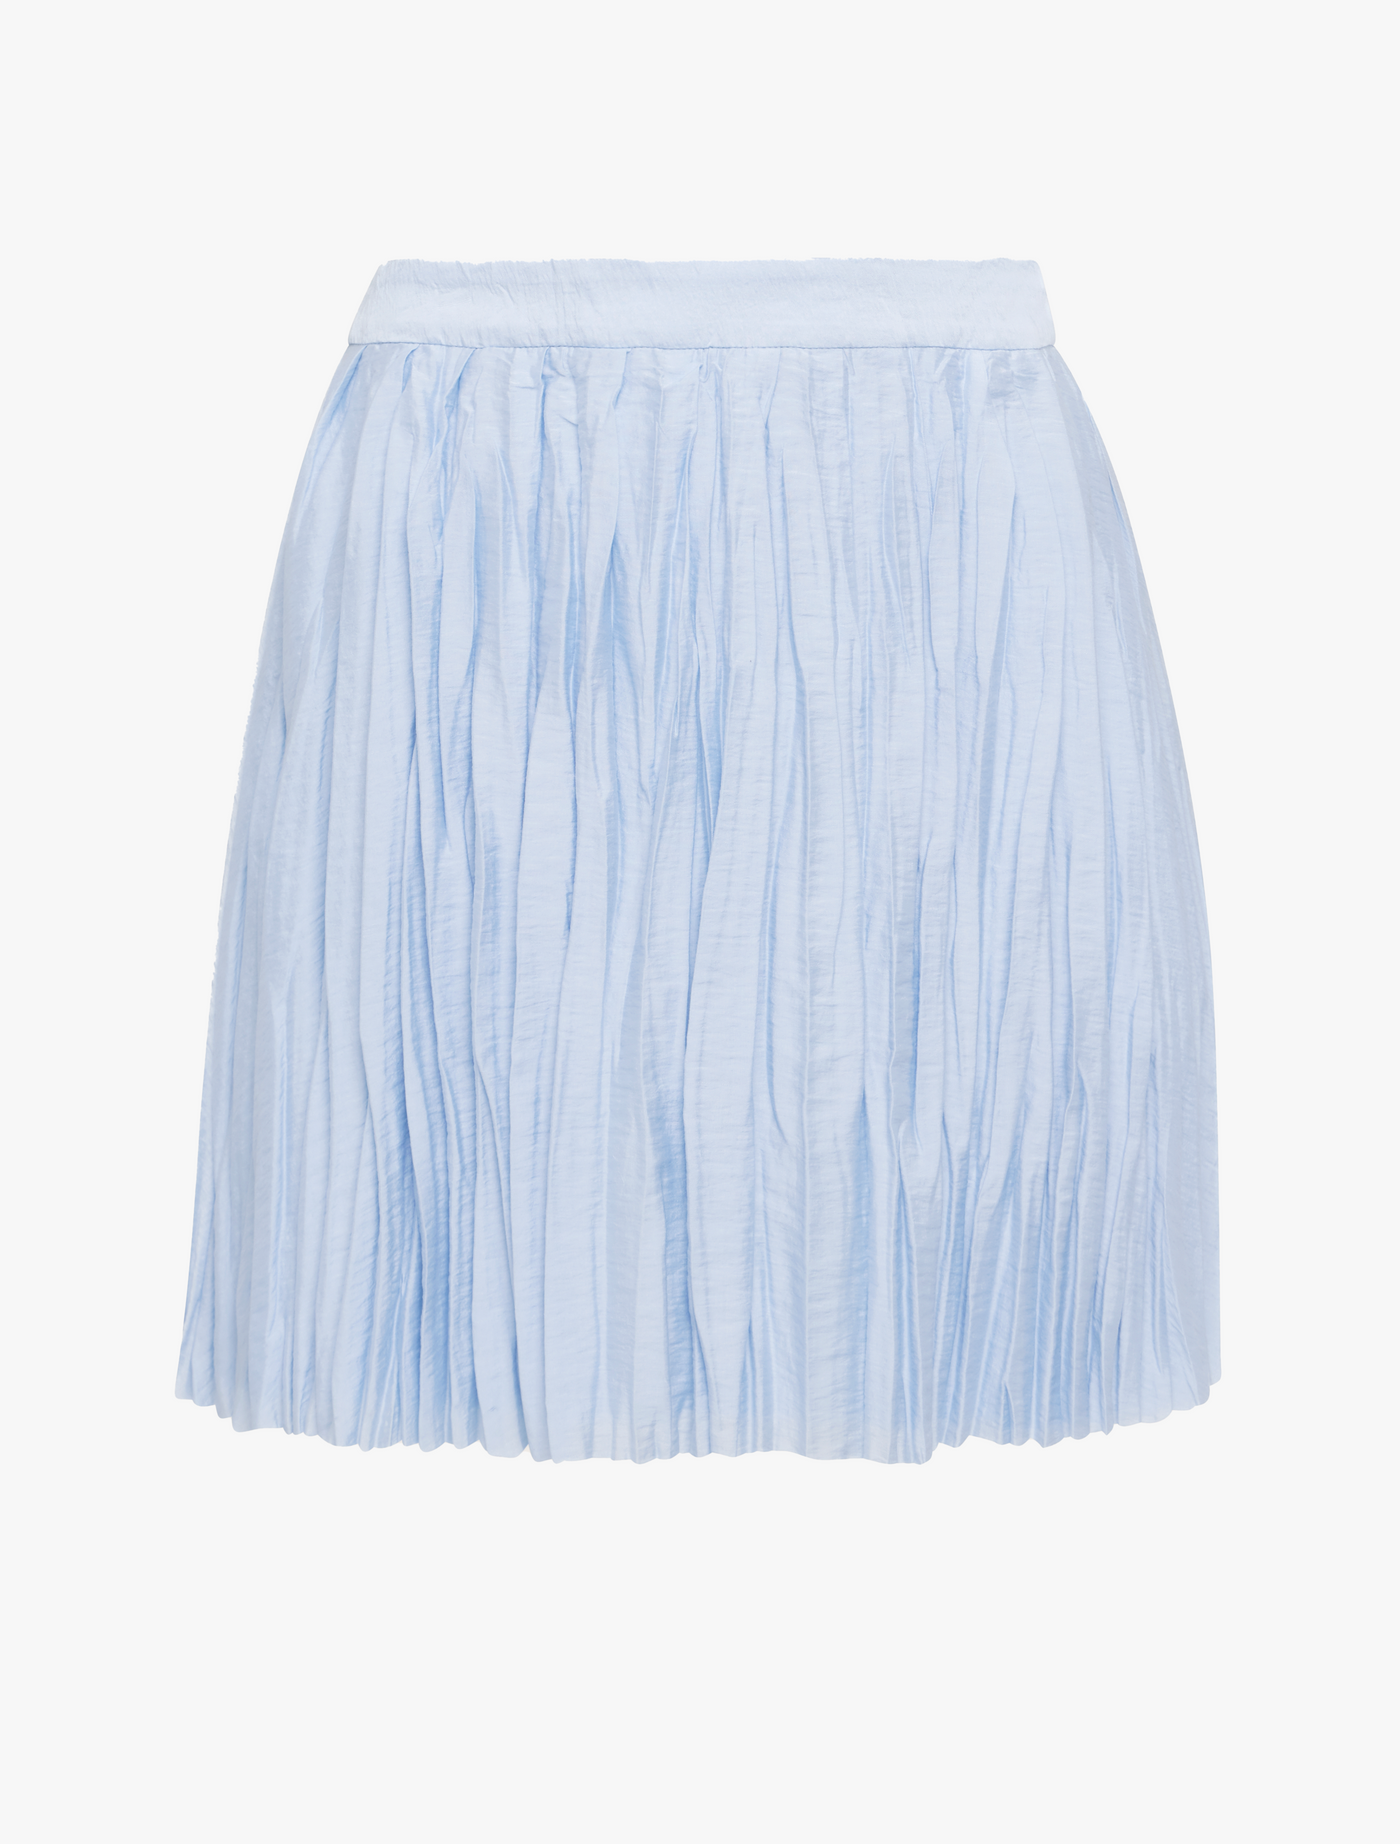 Tera Miniskirt In Sky Blue